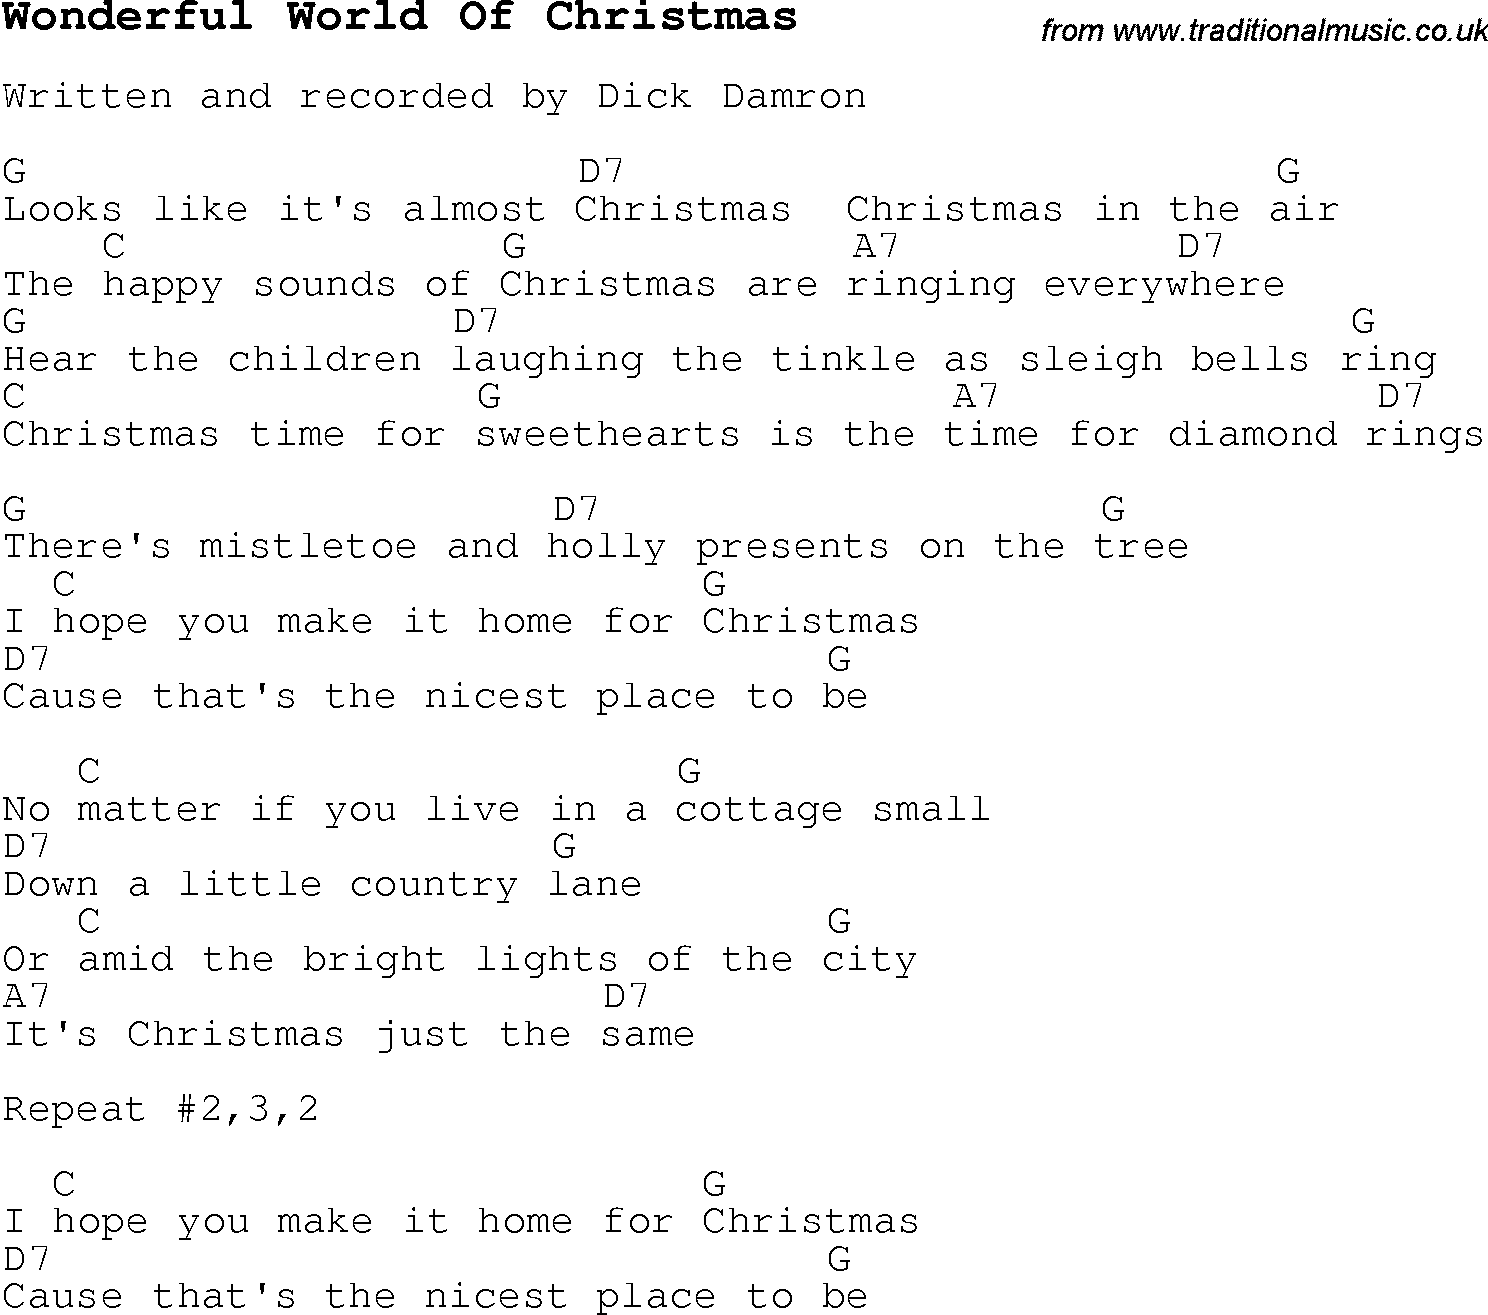 Christmas Songs and Carols, lyrics with chords for guitar banjo for Wonderful World Of Christmas